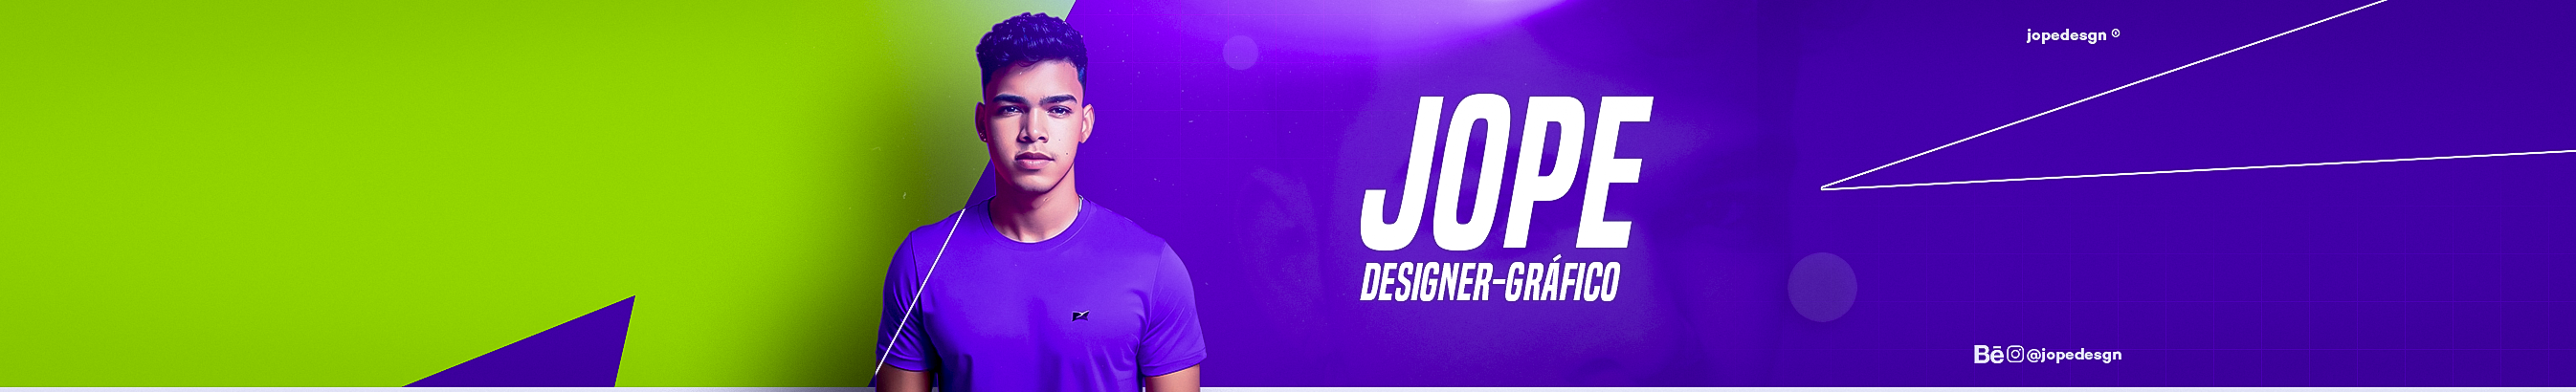 Jope Designers profilbanner